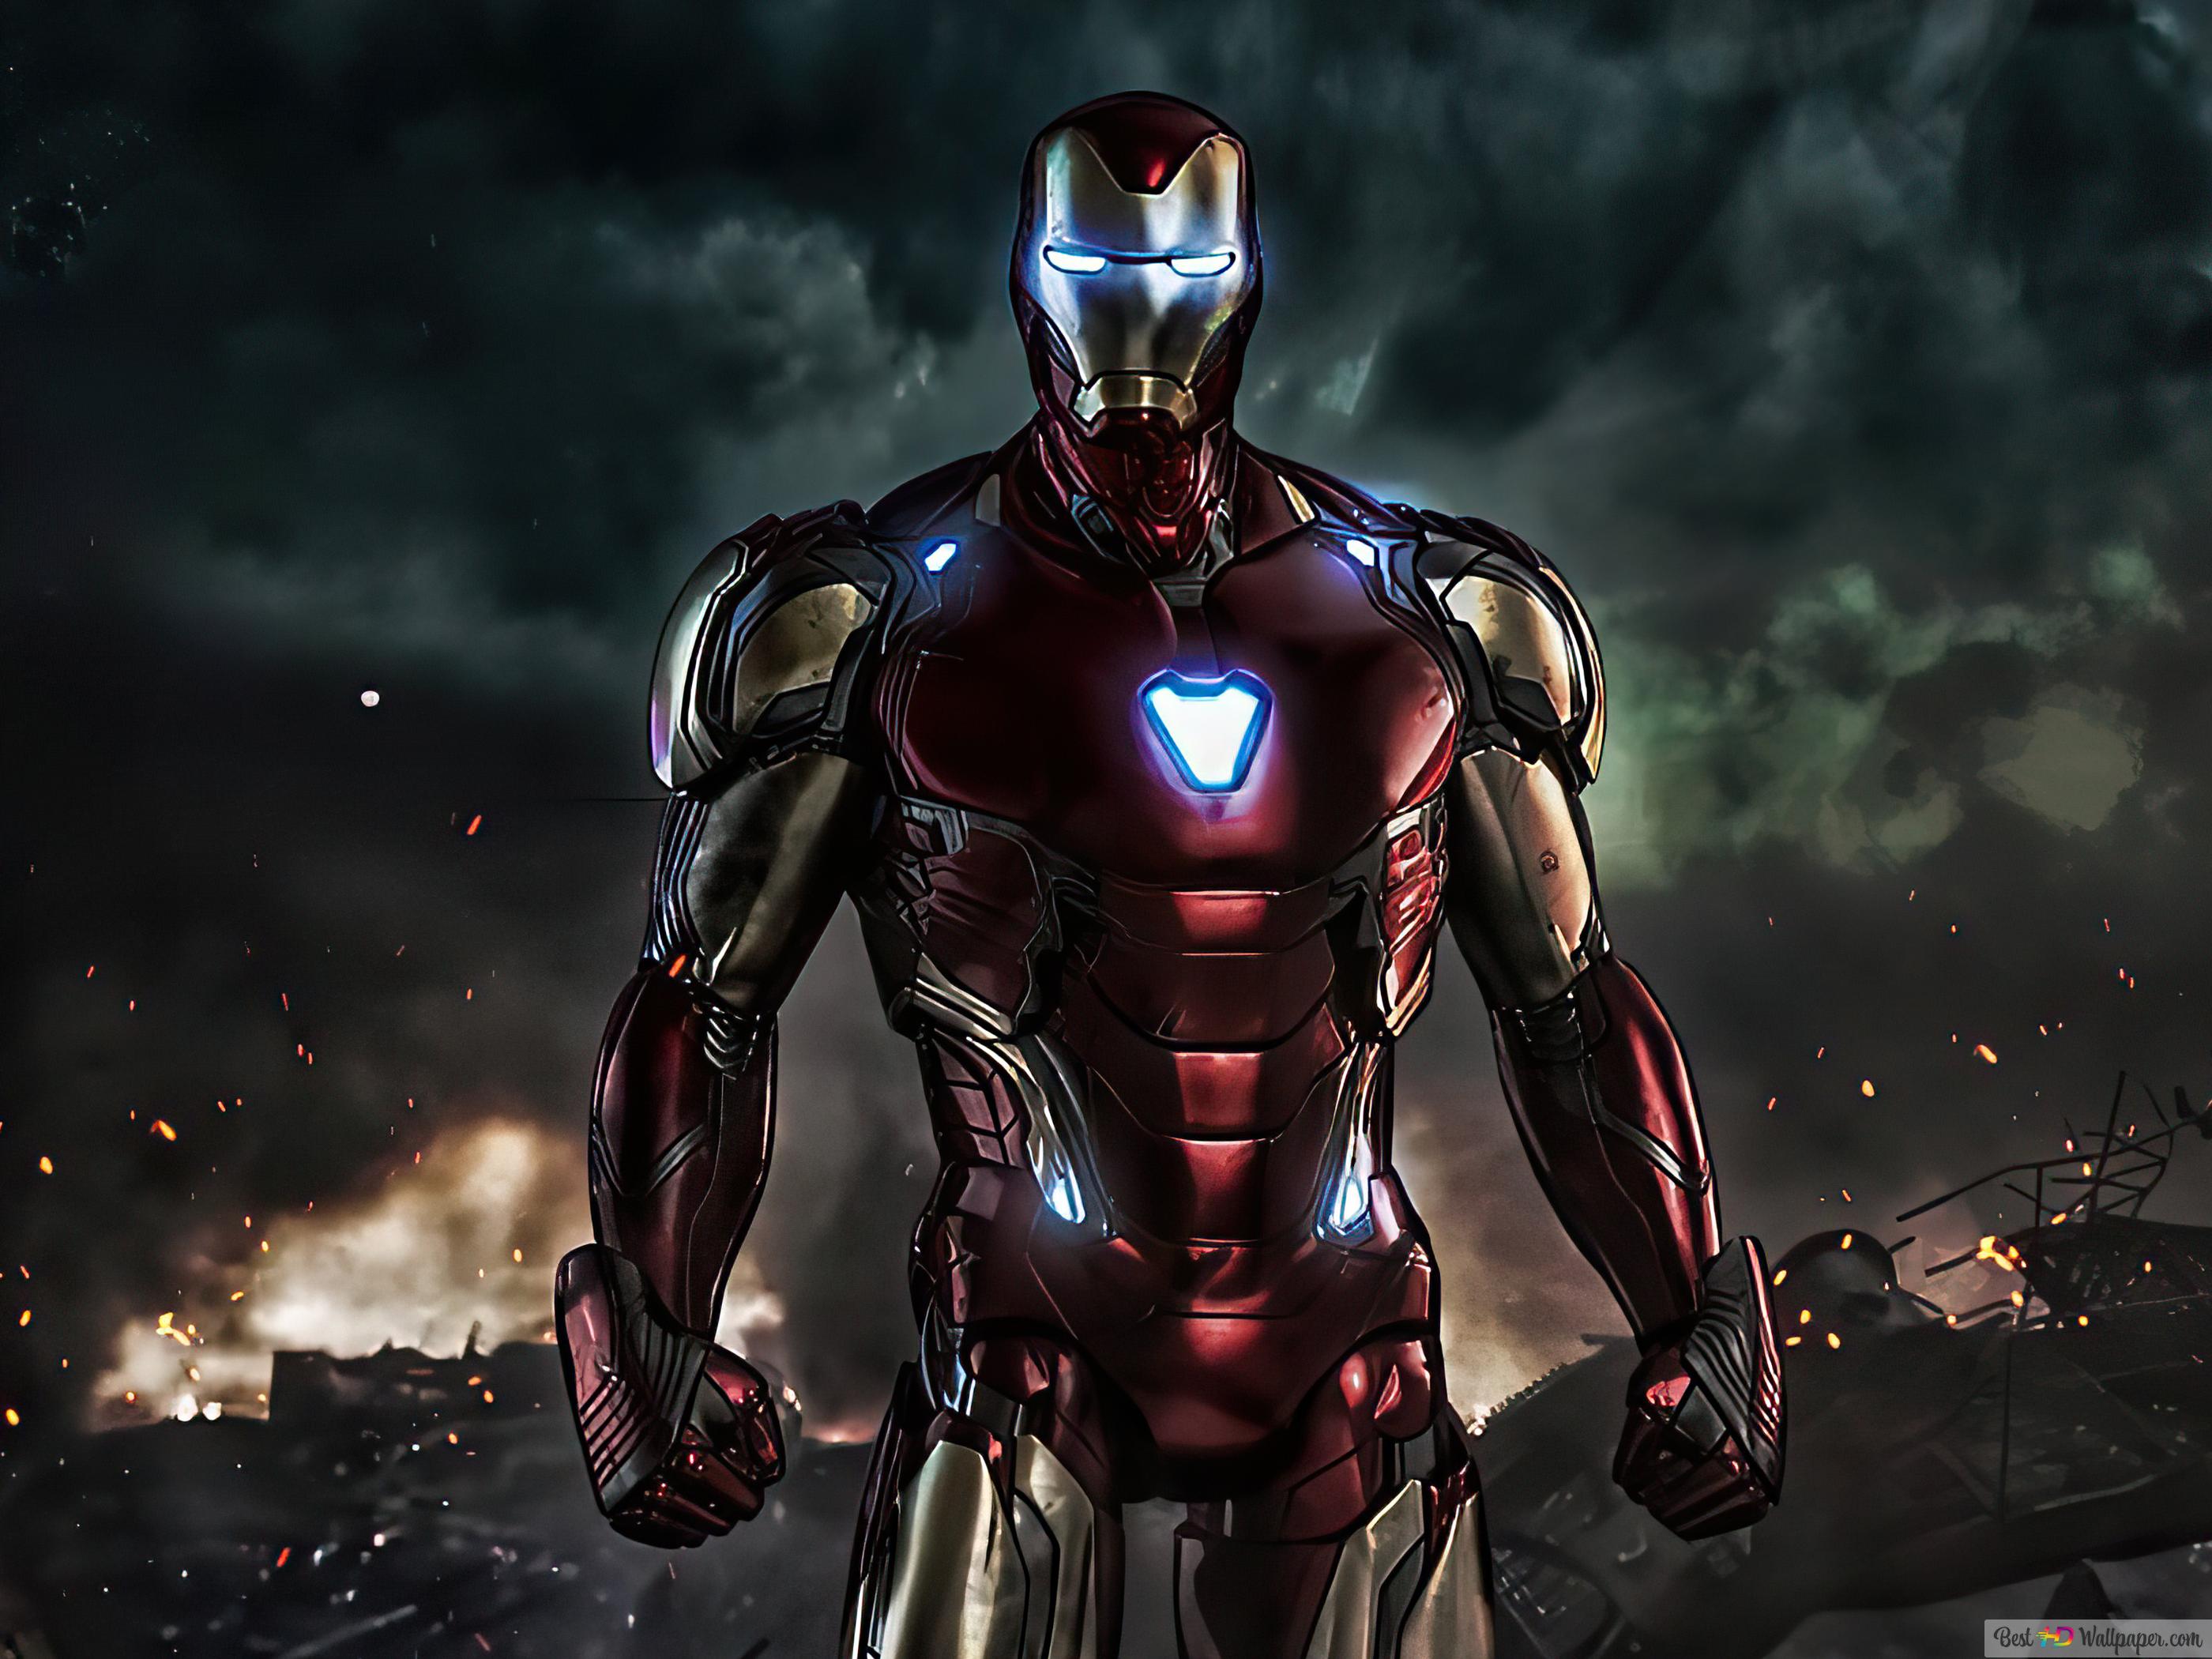 Iron Man In Avengers Endgame 4K wallpaper download